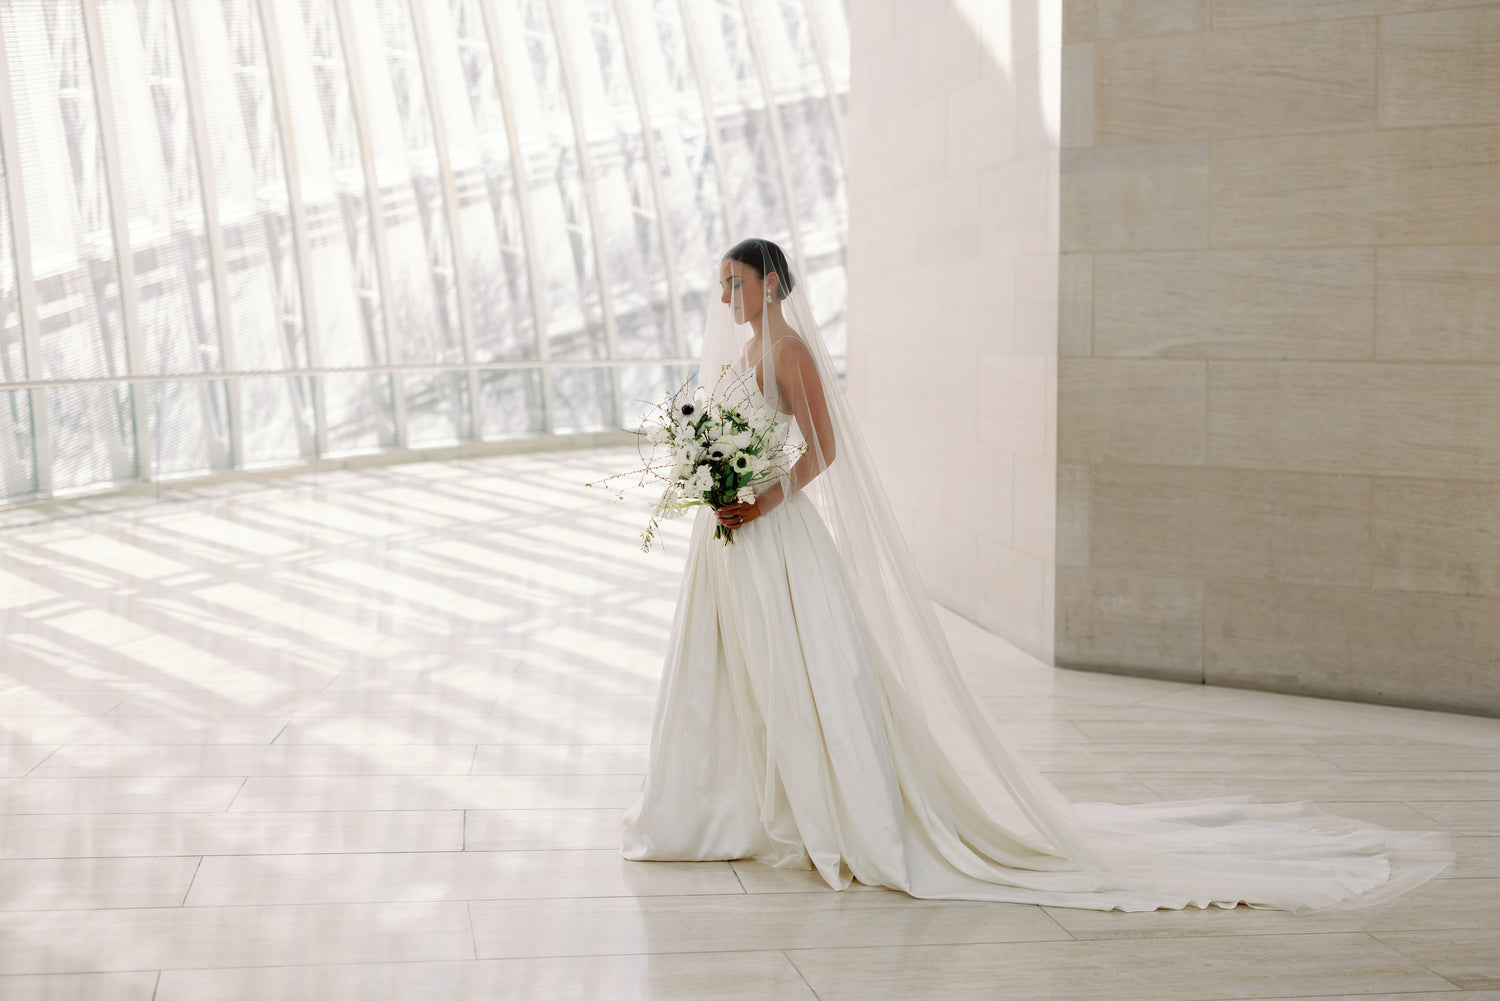 drop circle cut cathedral length wedding veil on bride in modern museum wedding venue